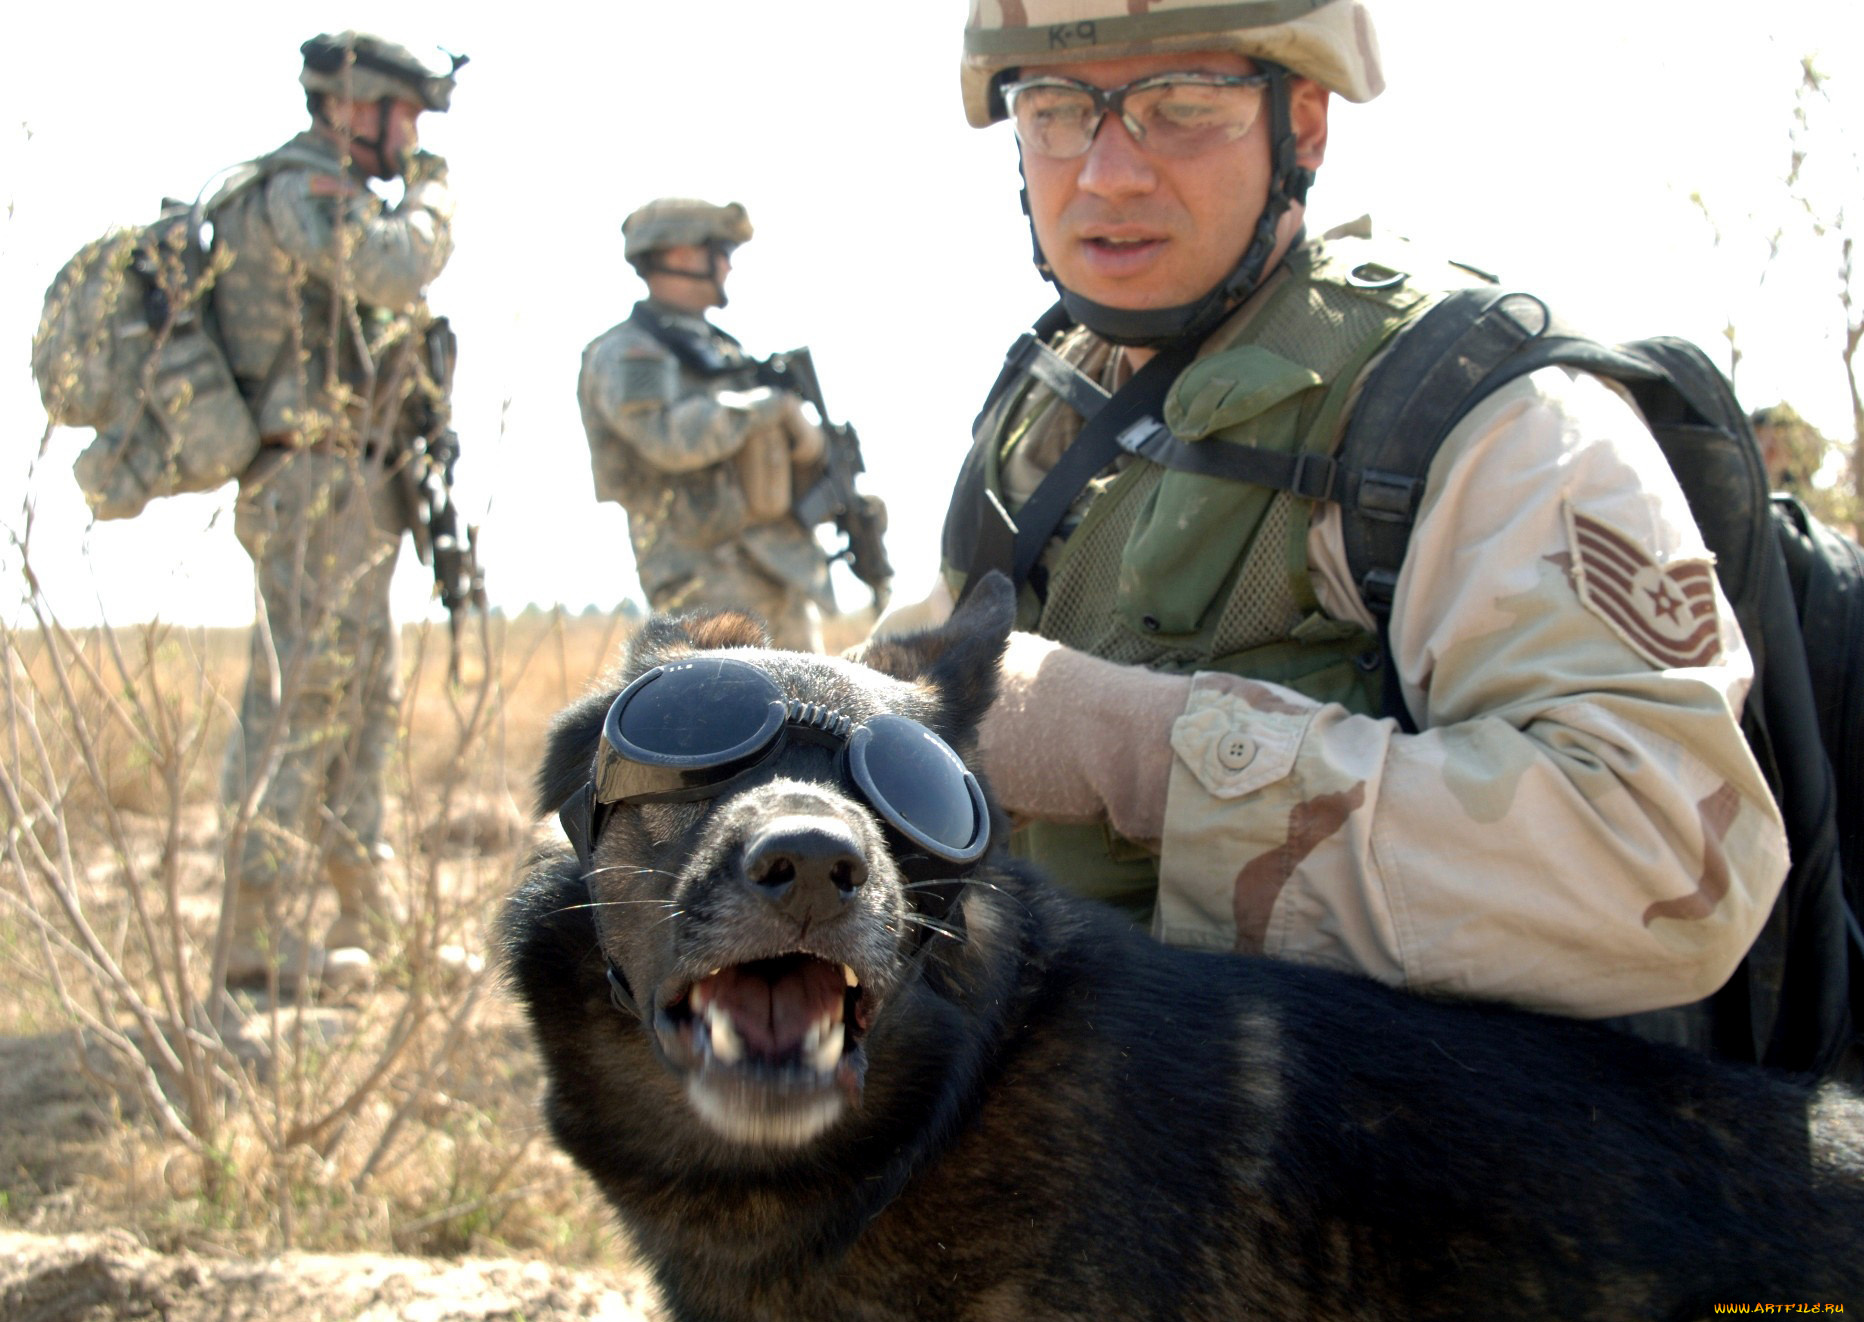 оружие, армия, спецназ, морпехи, собака, очки